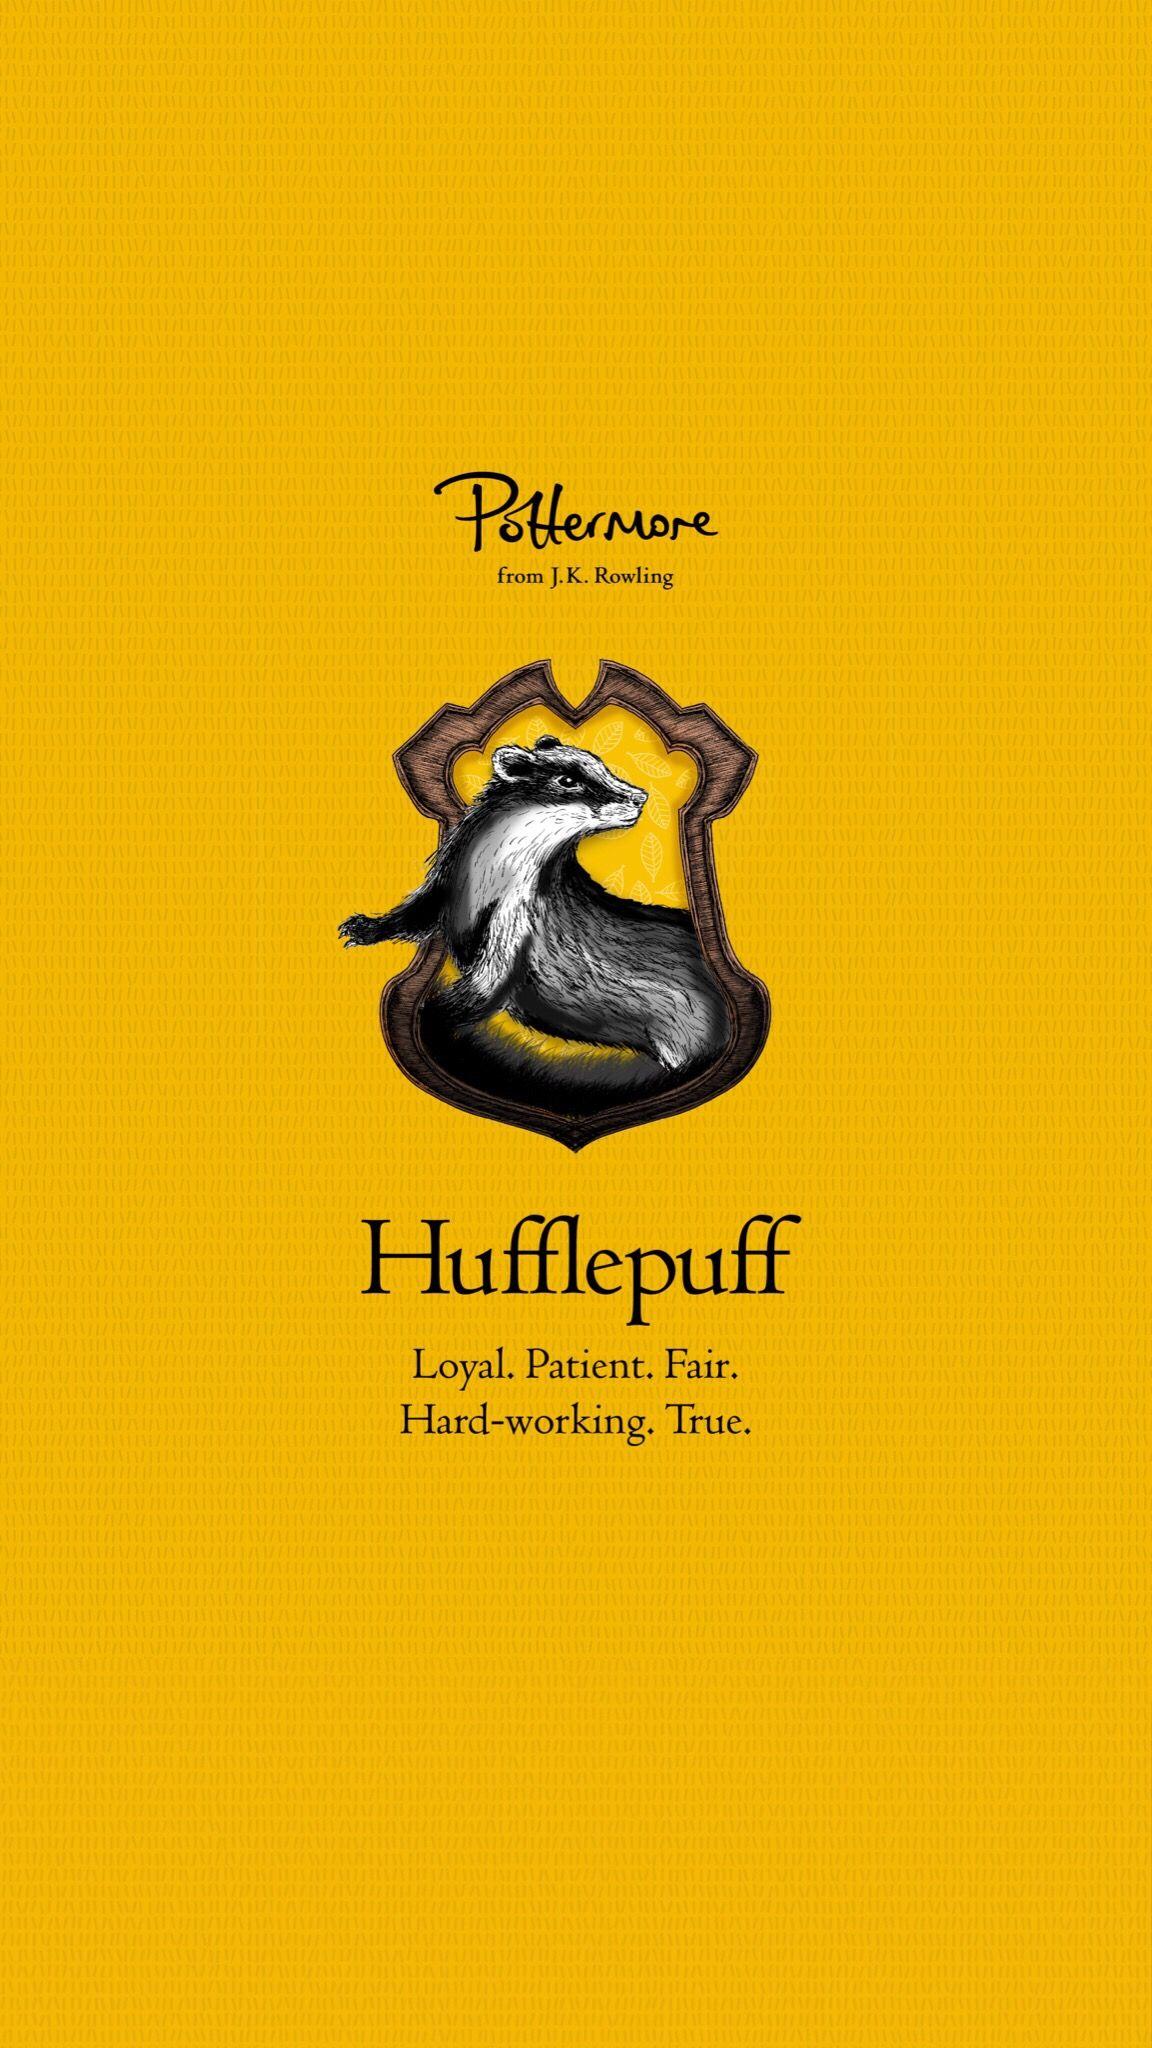 iPhone Hufflepuff Pottermore Wallpaper. Harry potter wallpaper, Harry potter hogwarts houses, Hufflepuff